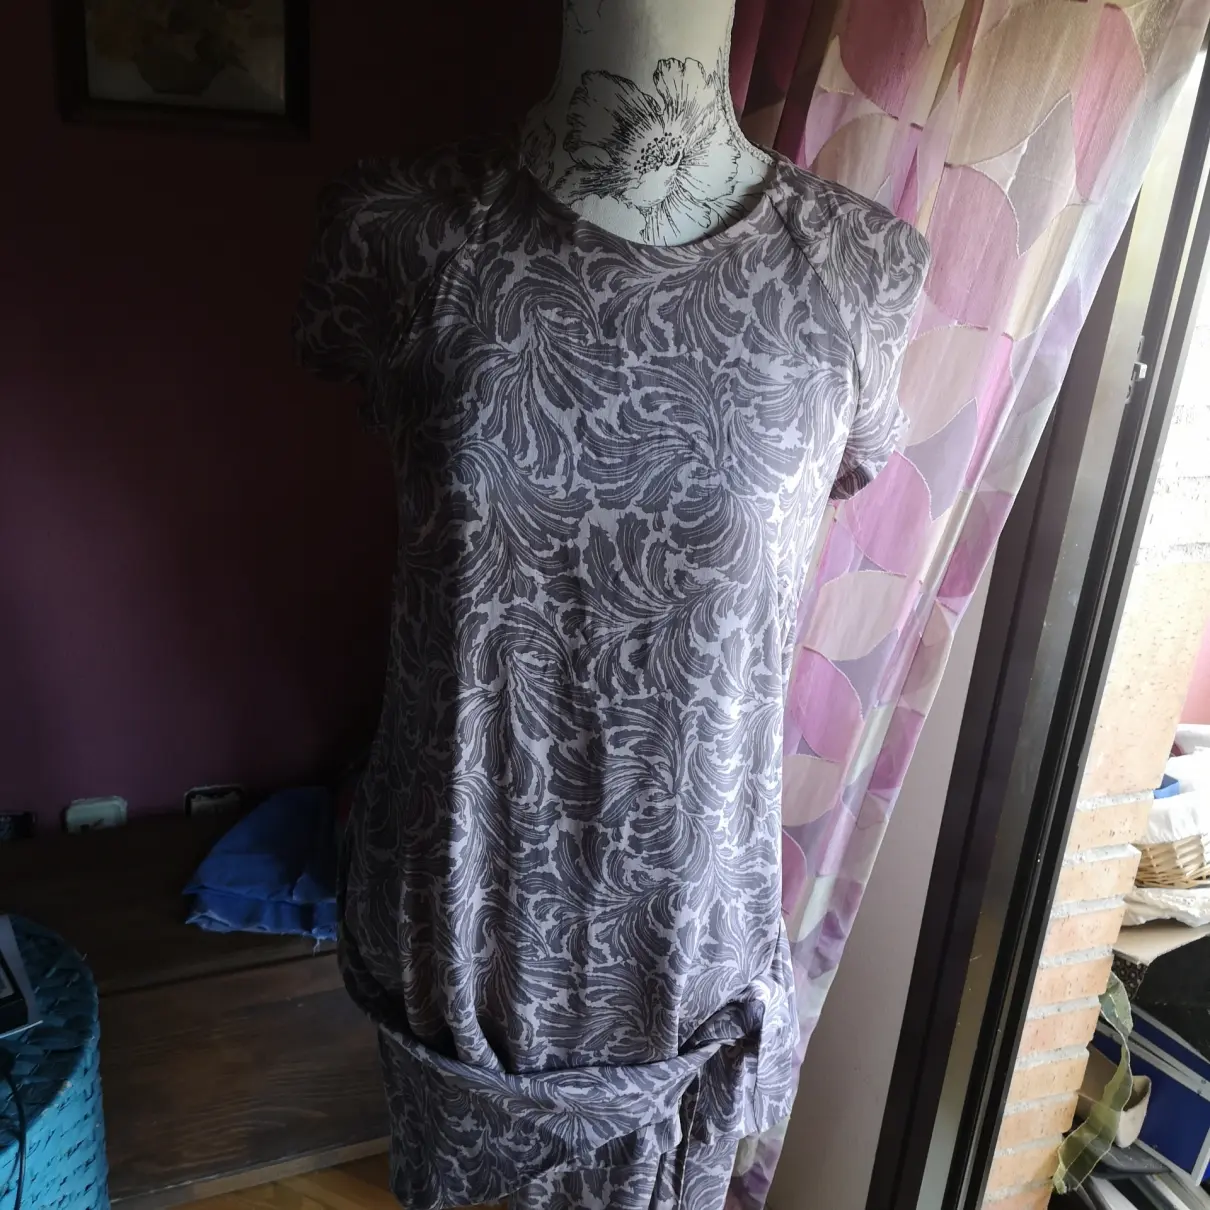 Silk mid-length dress Hoss Intropia